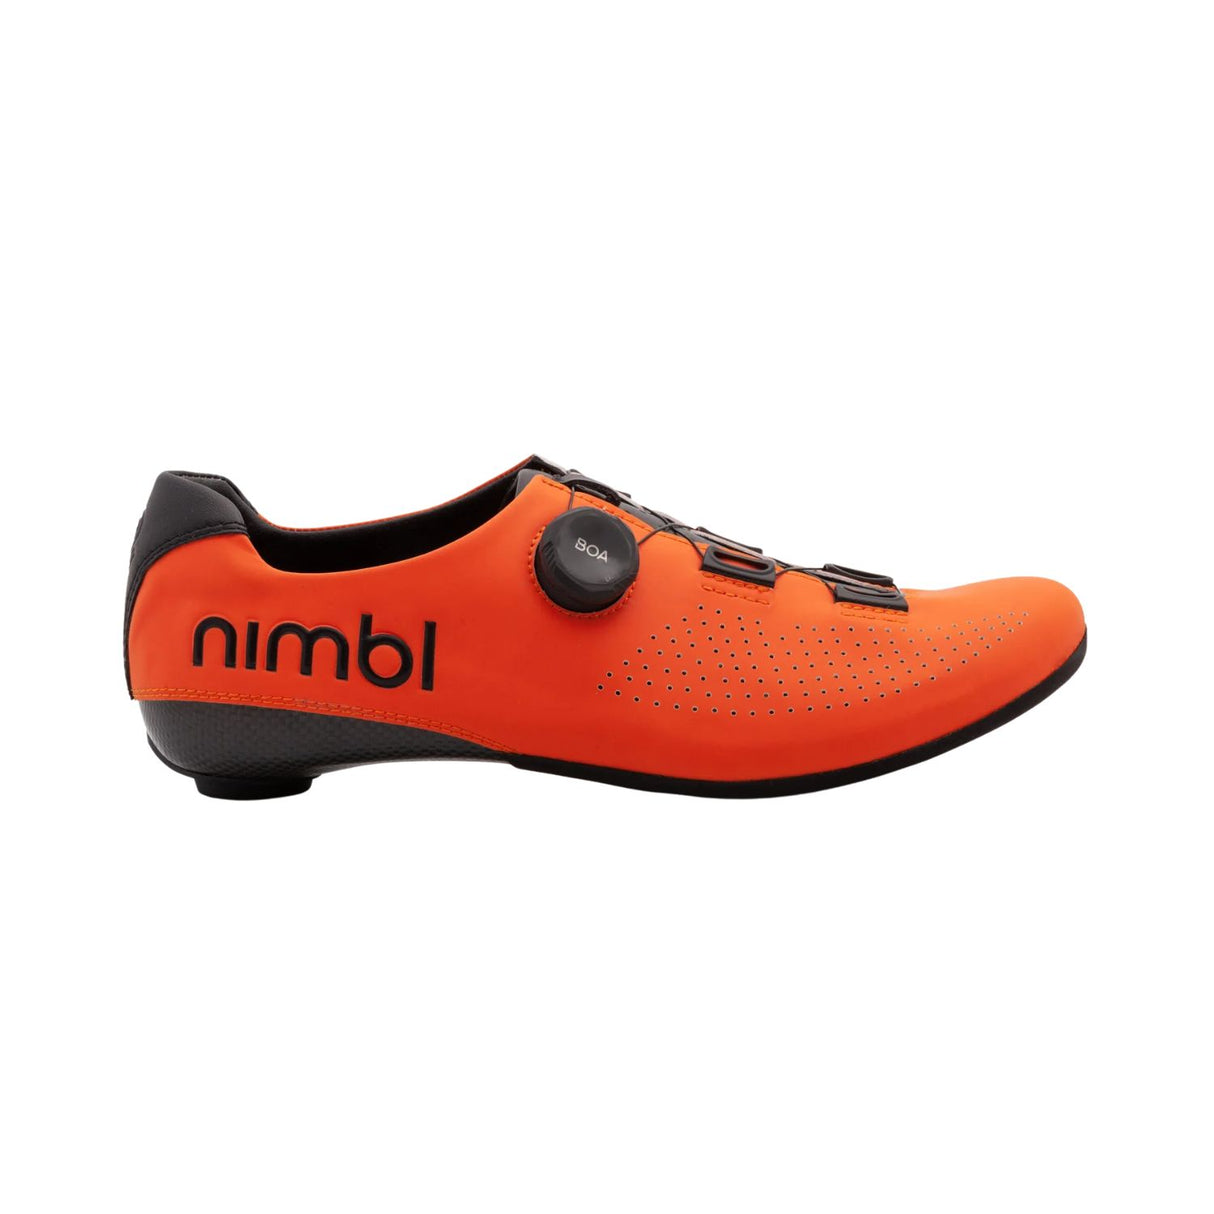 Nimbl Feat Shoes